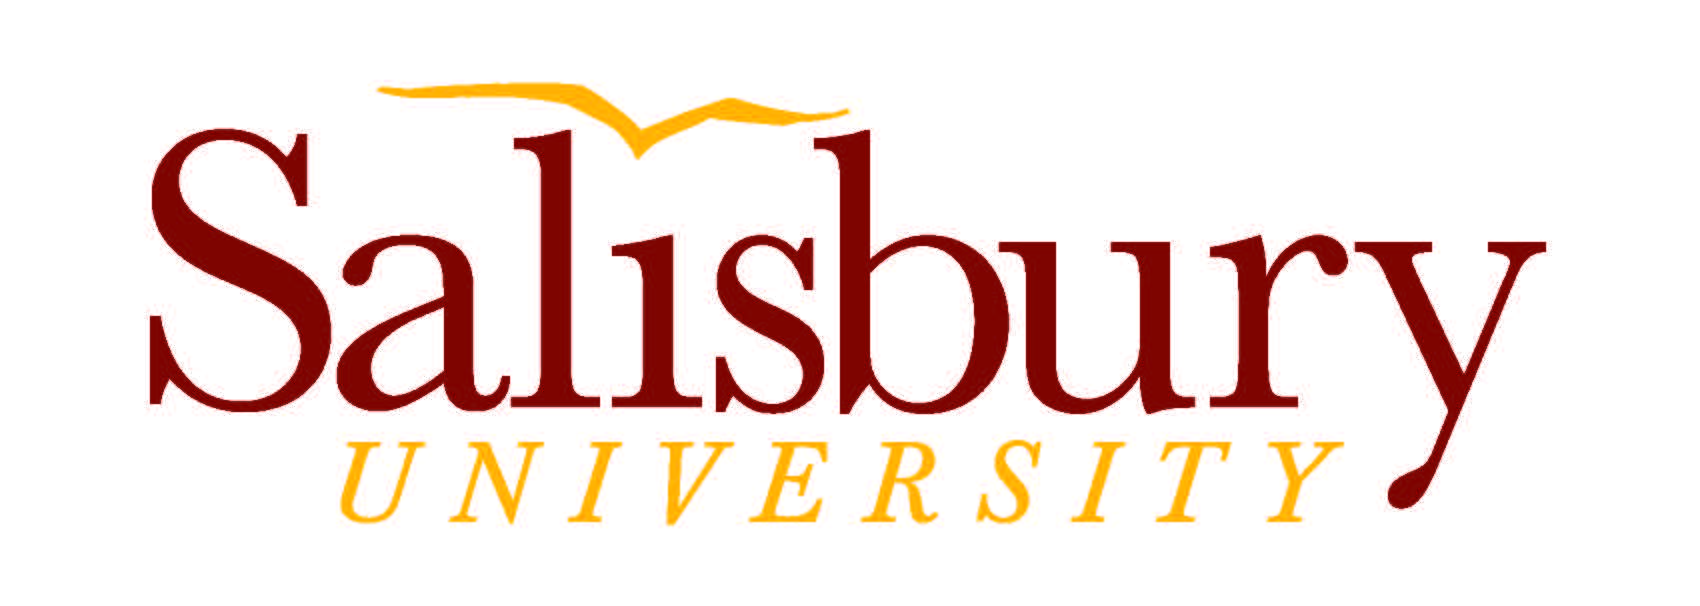 The Salisbury University logo.